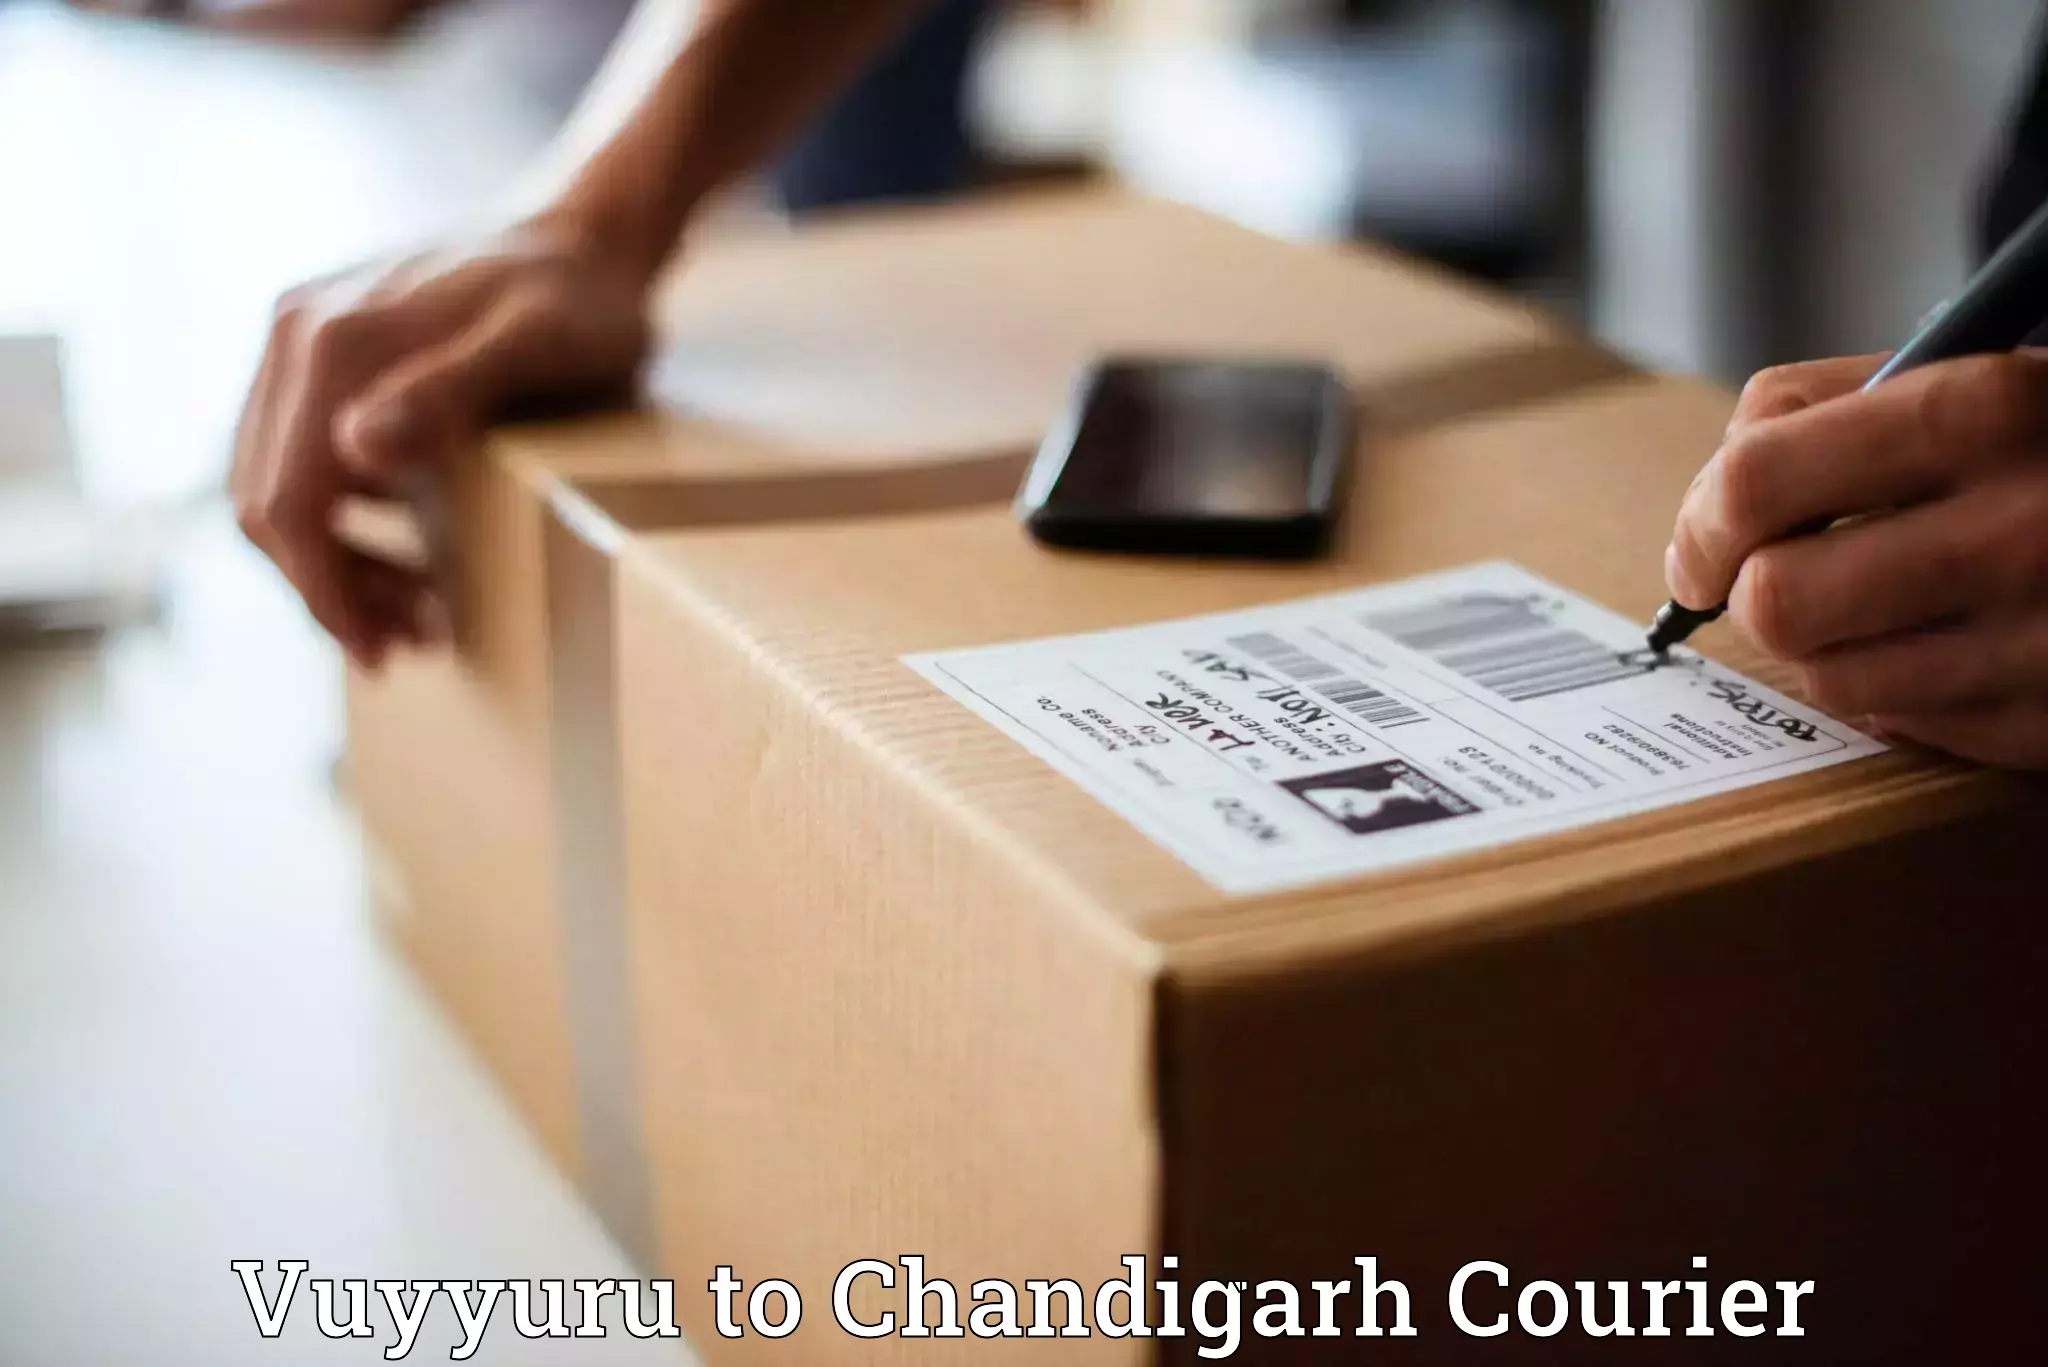 Express package handling Vuyyuru to Chandigarh